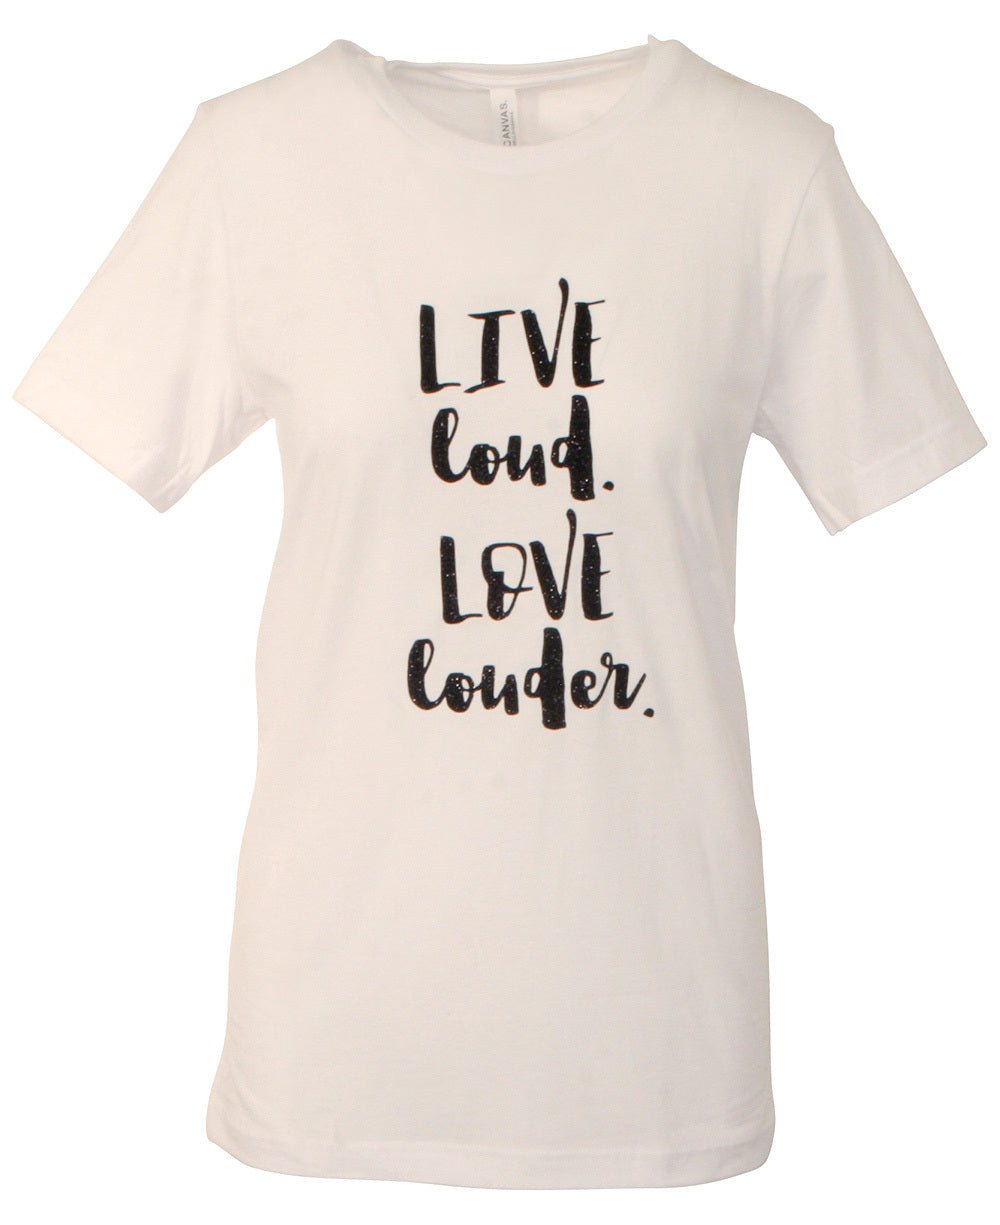 Live Loud Love Louder, Women’s Motivational Tee - Inspirational Apparel M